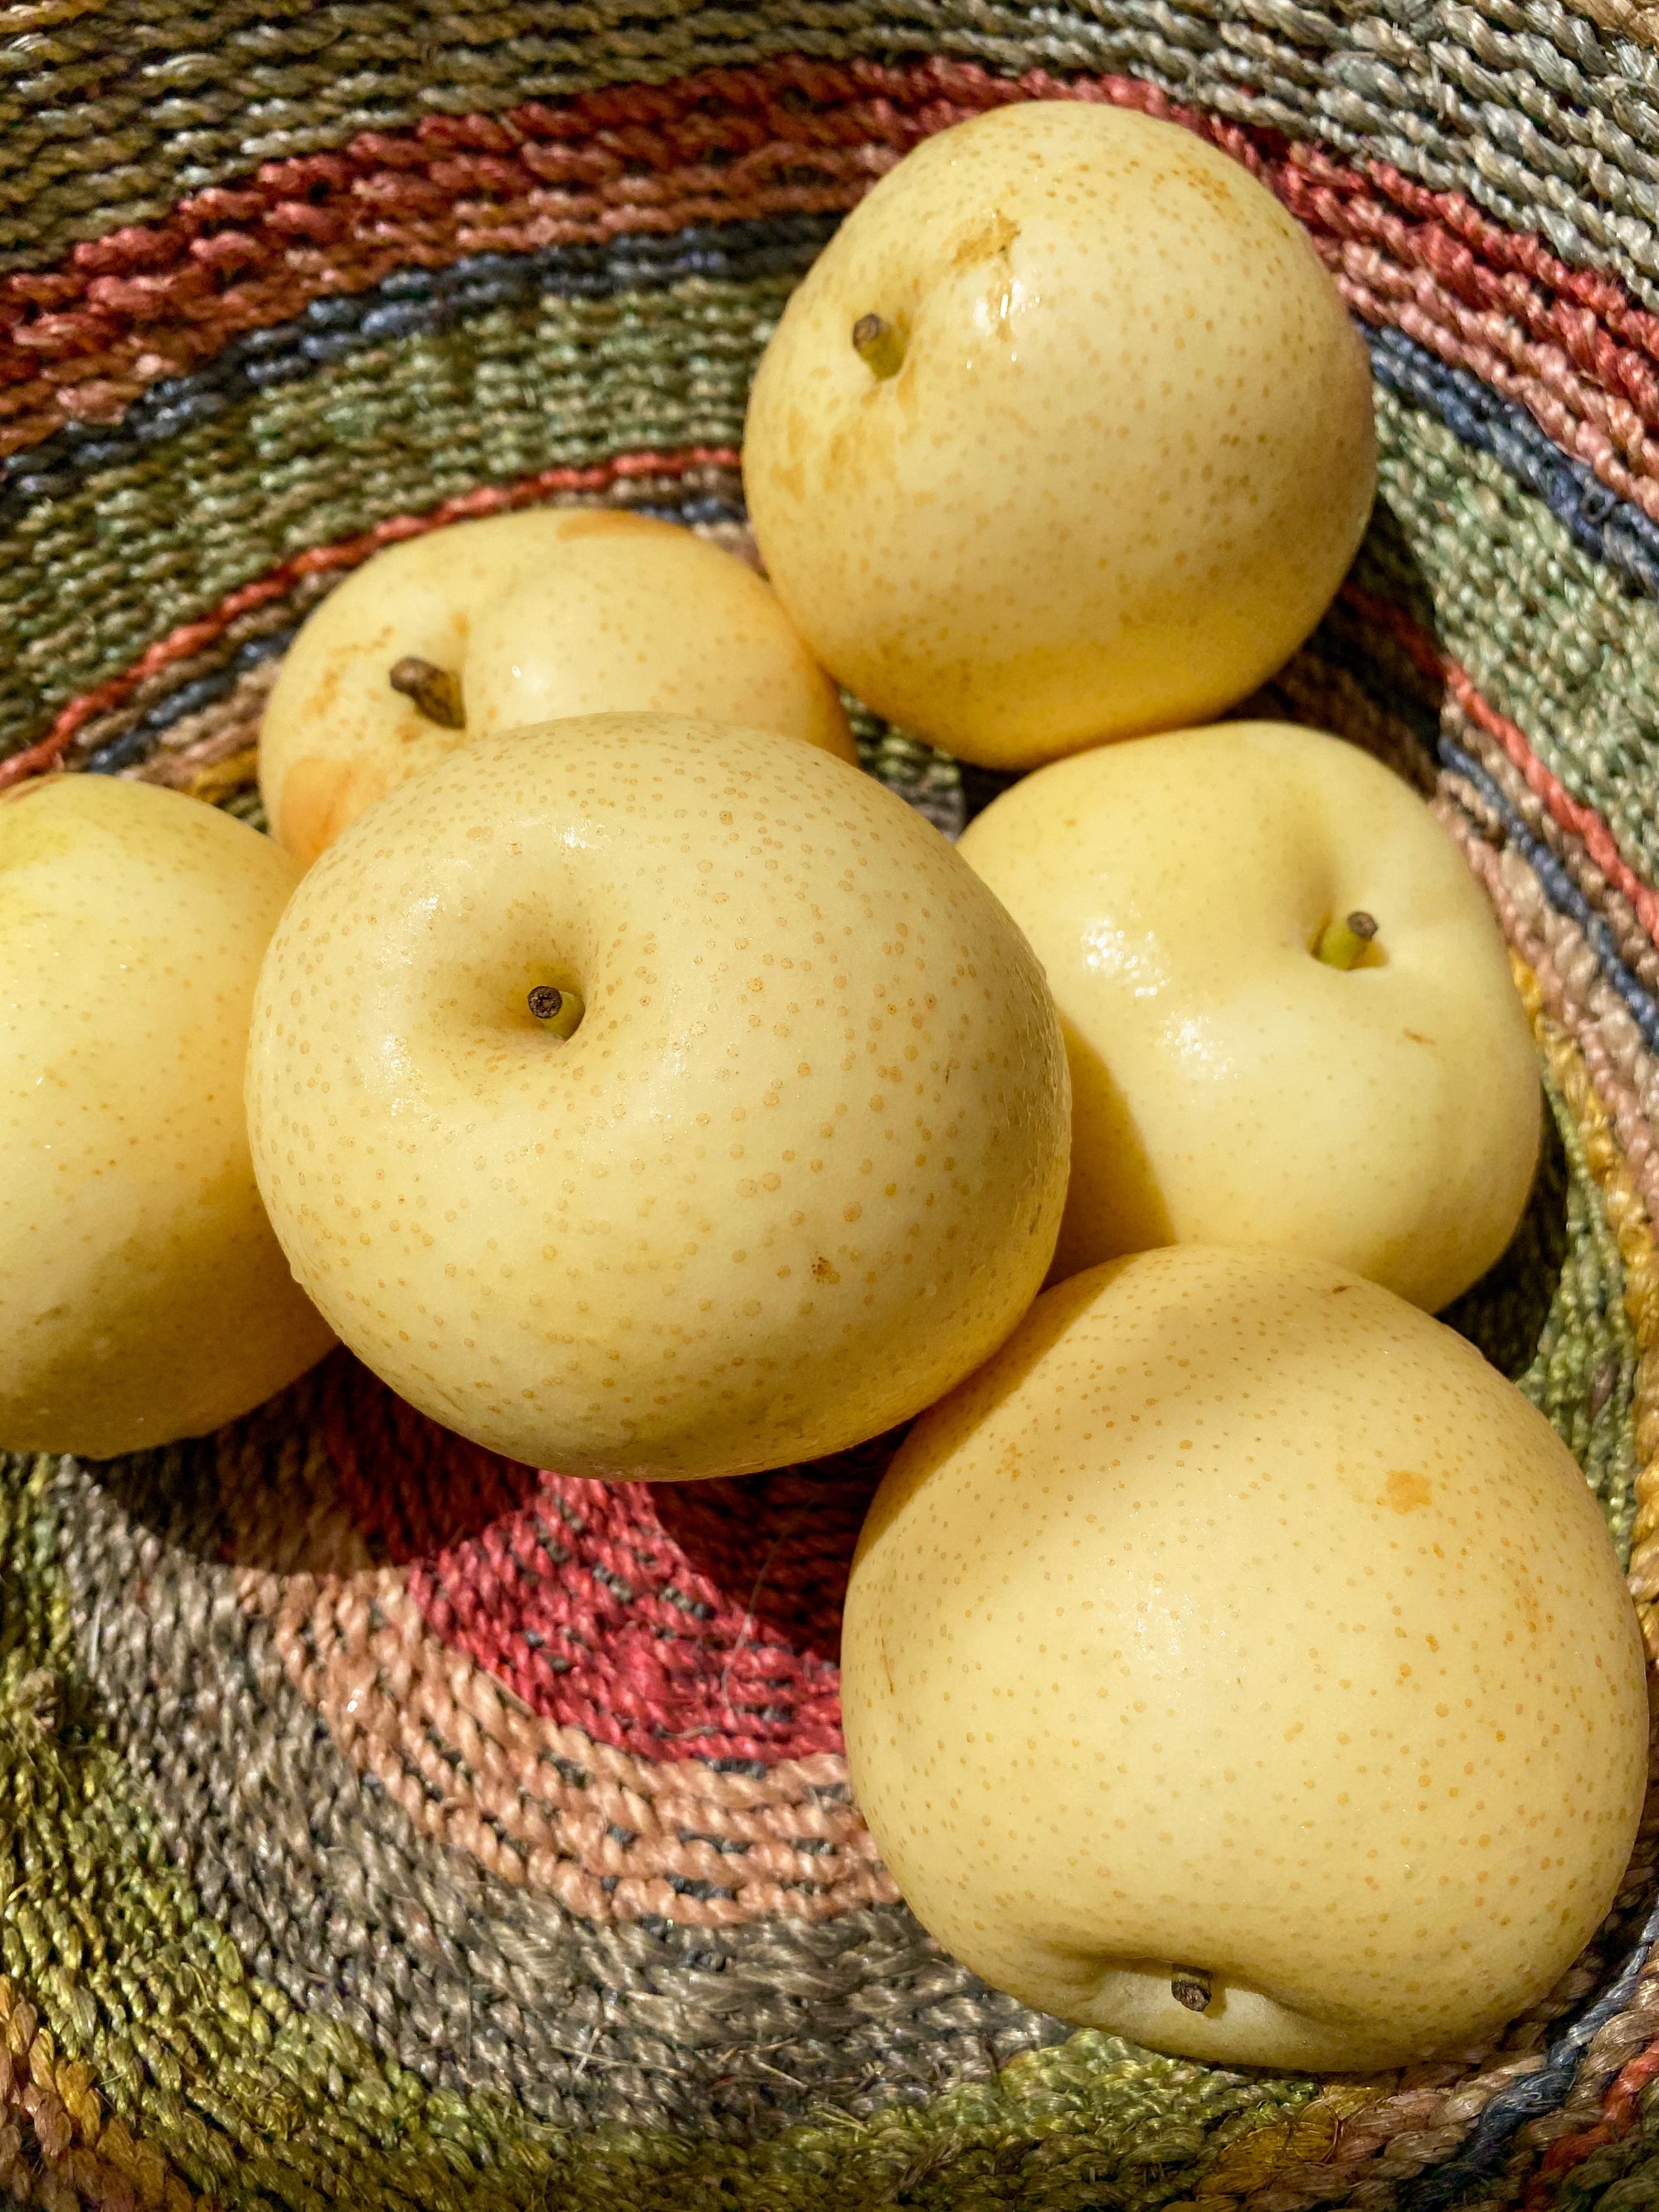 Century Pears